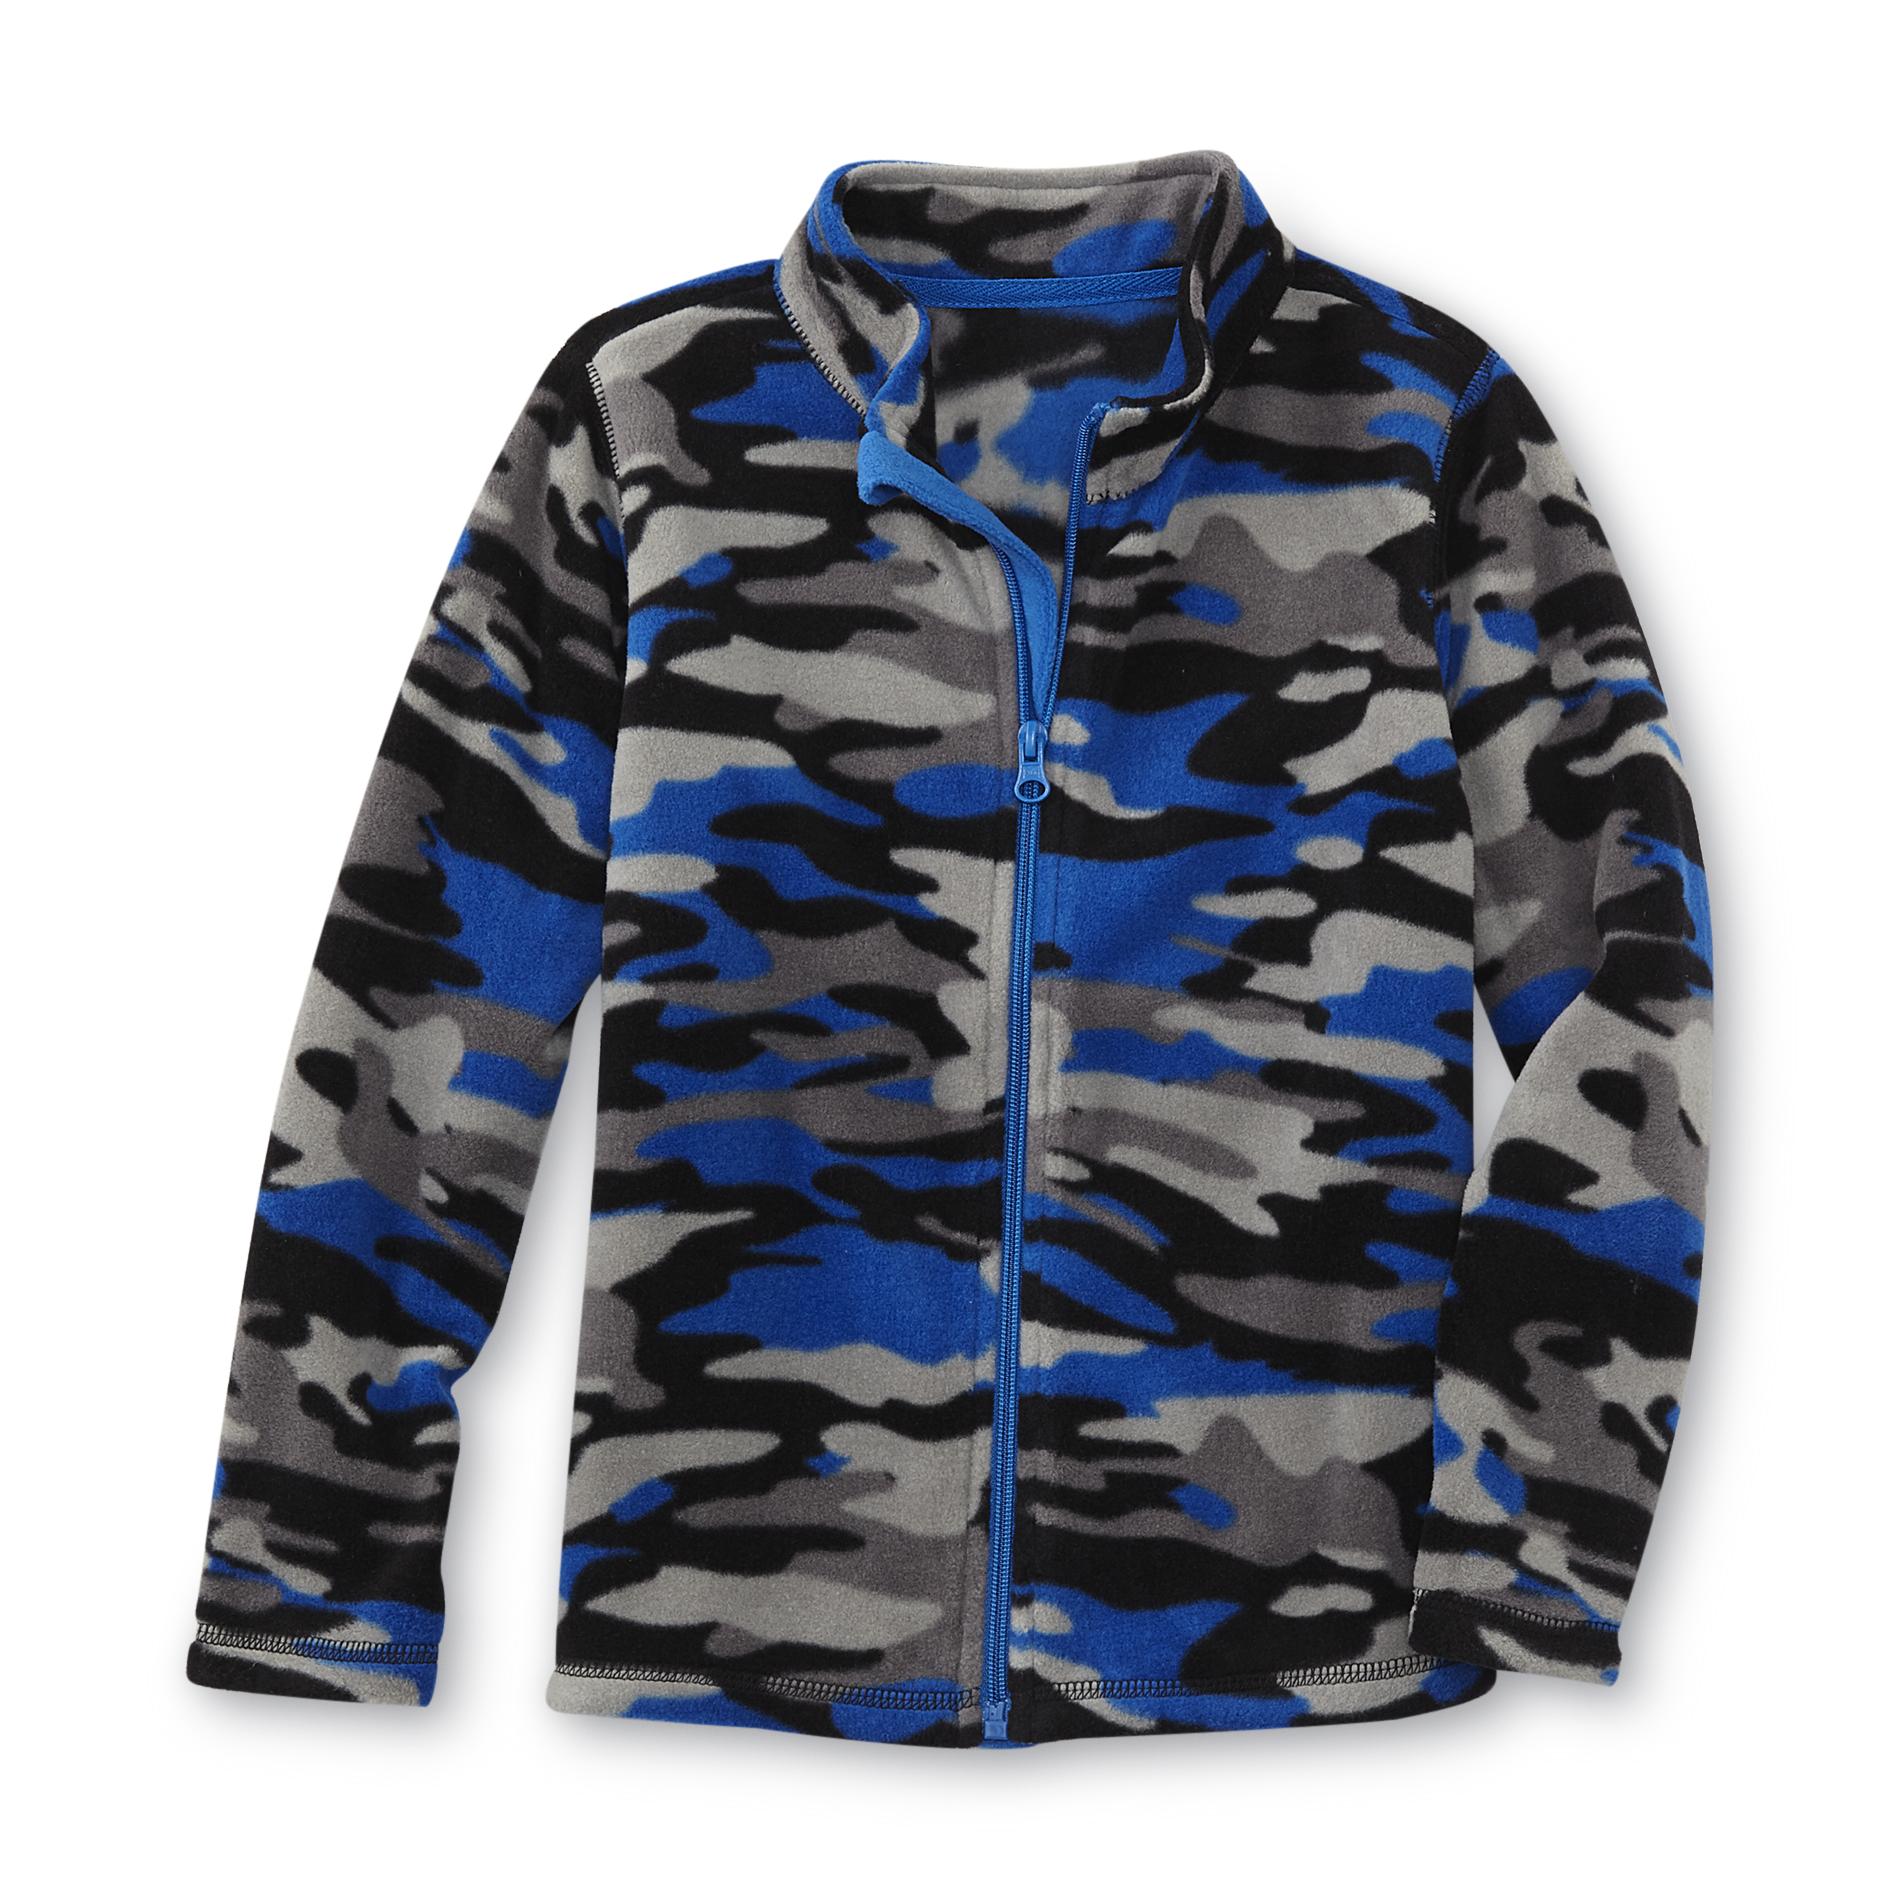 Toughskins Boy's Fleece Jacket - Camouflage